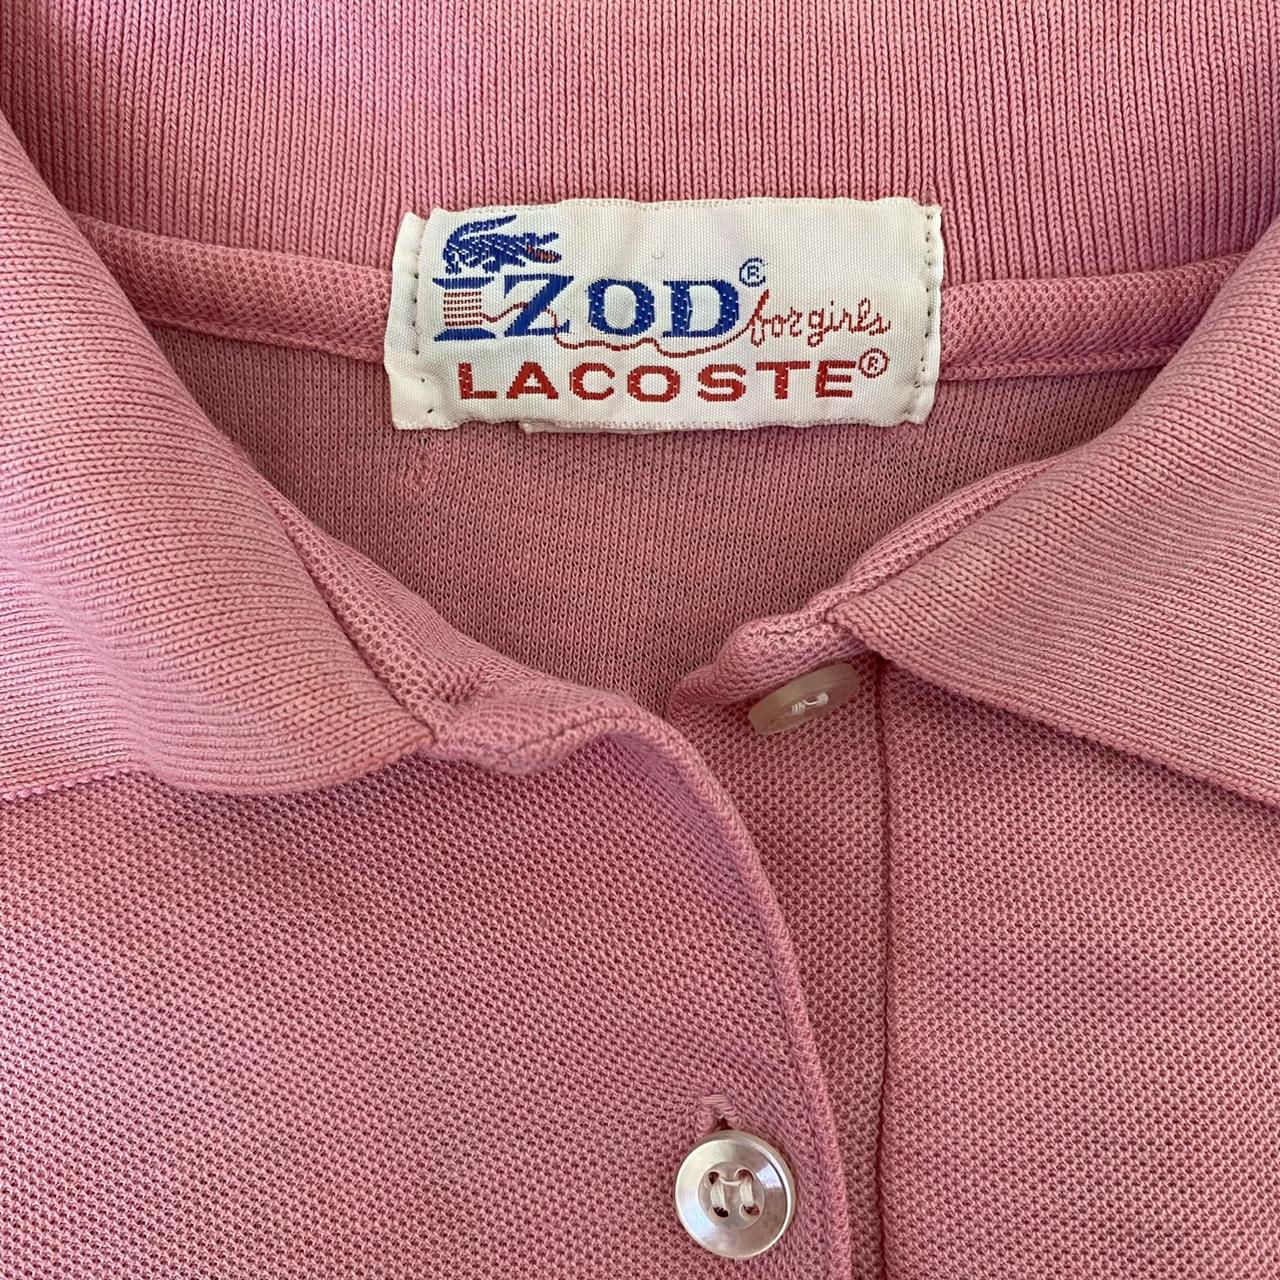 Lacoste for girls 🐊... genuine polo pink shirt Depop Vintage -